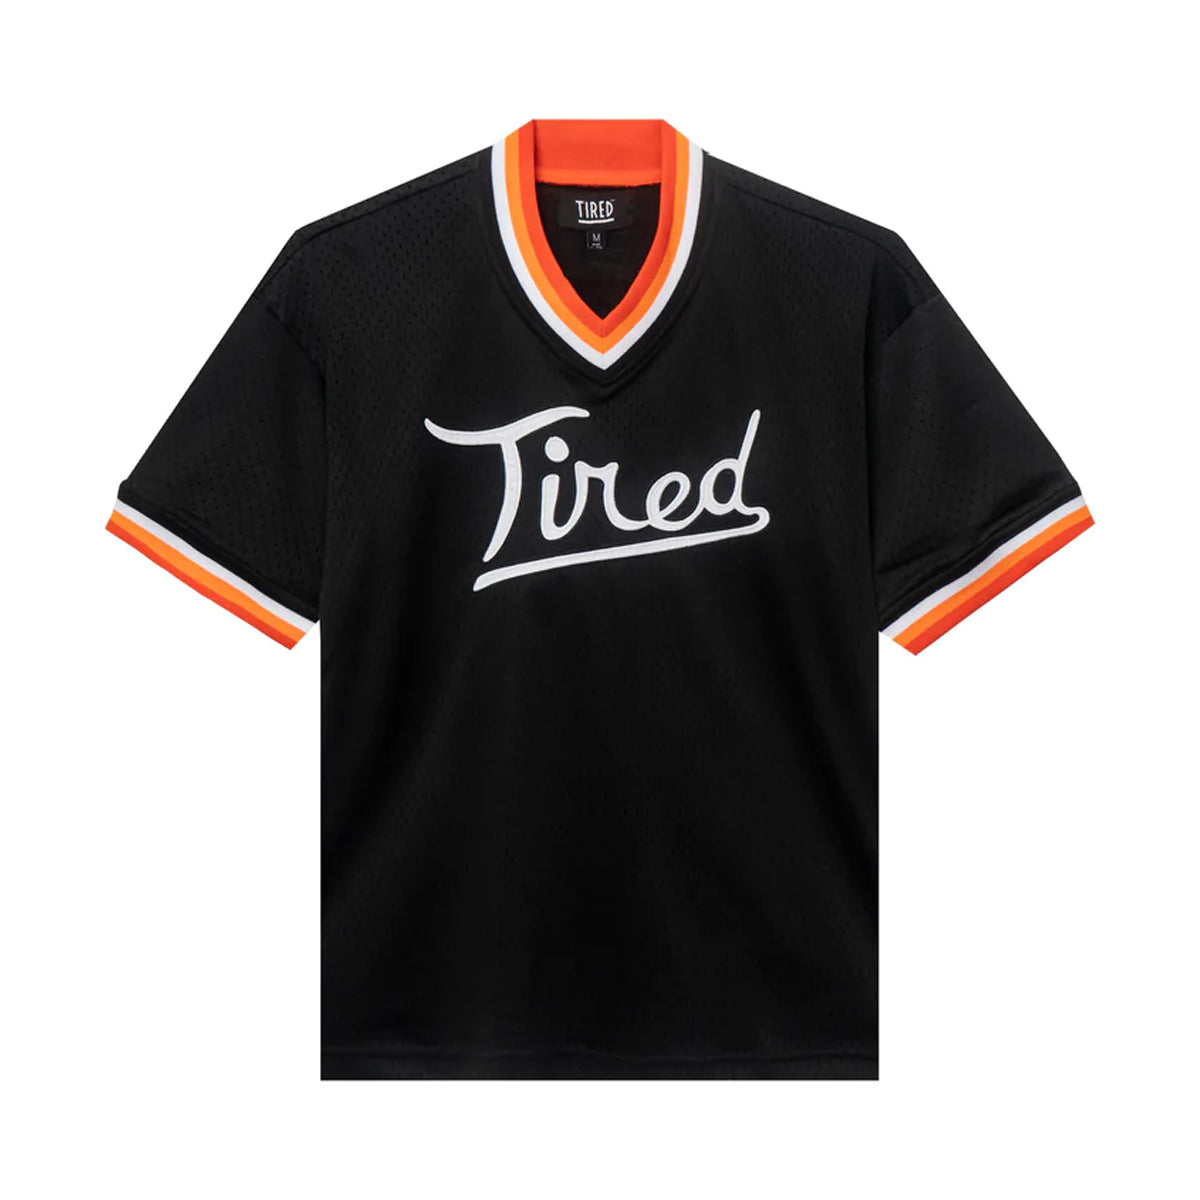 Tired Rounders Mesh Baseball Jersey (Black/Orange/White) - Apple Valley Emporium